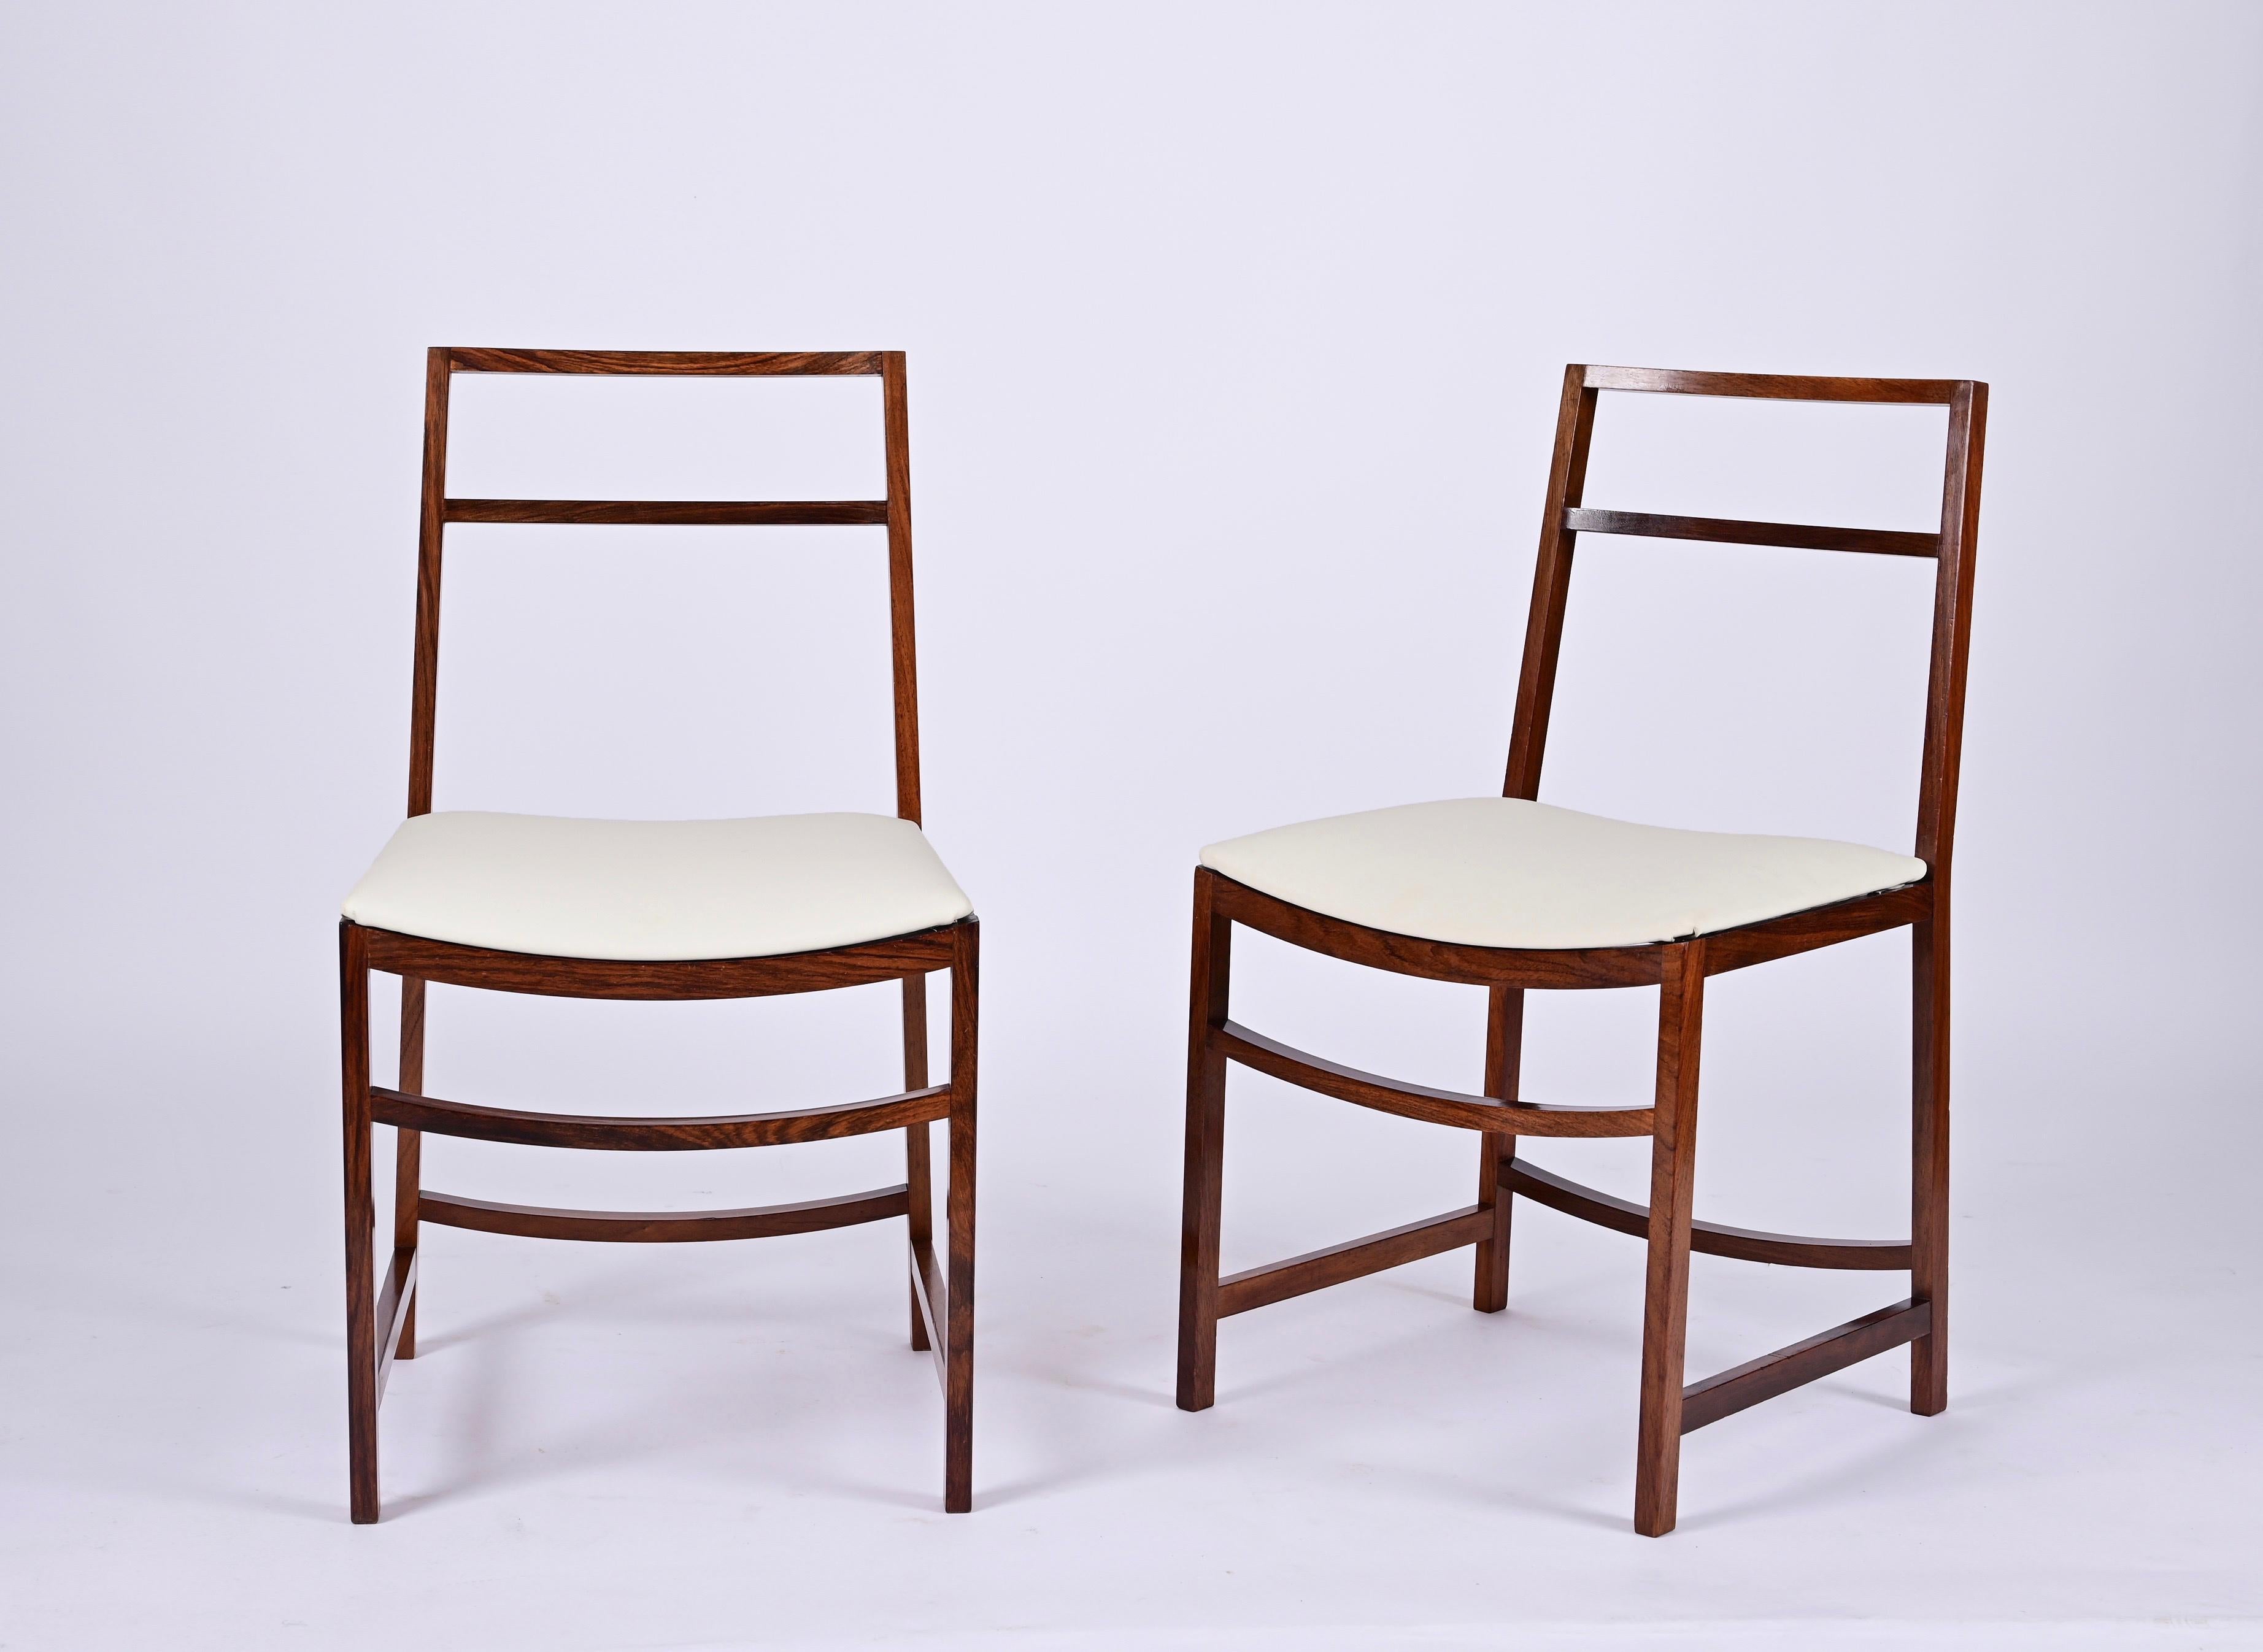 Mid-20th Century Midcentury Italian Dining Chairs in Teak, Renato Venturi for MIM Roma, 1960s For Sale